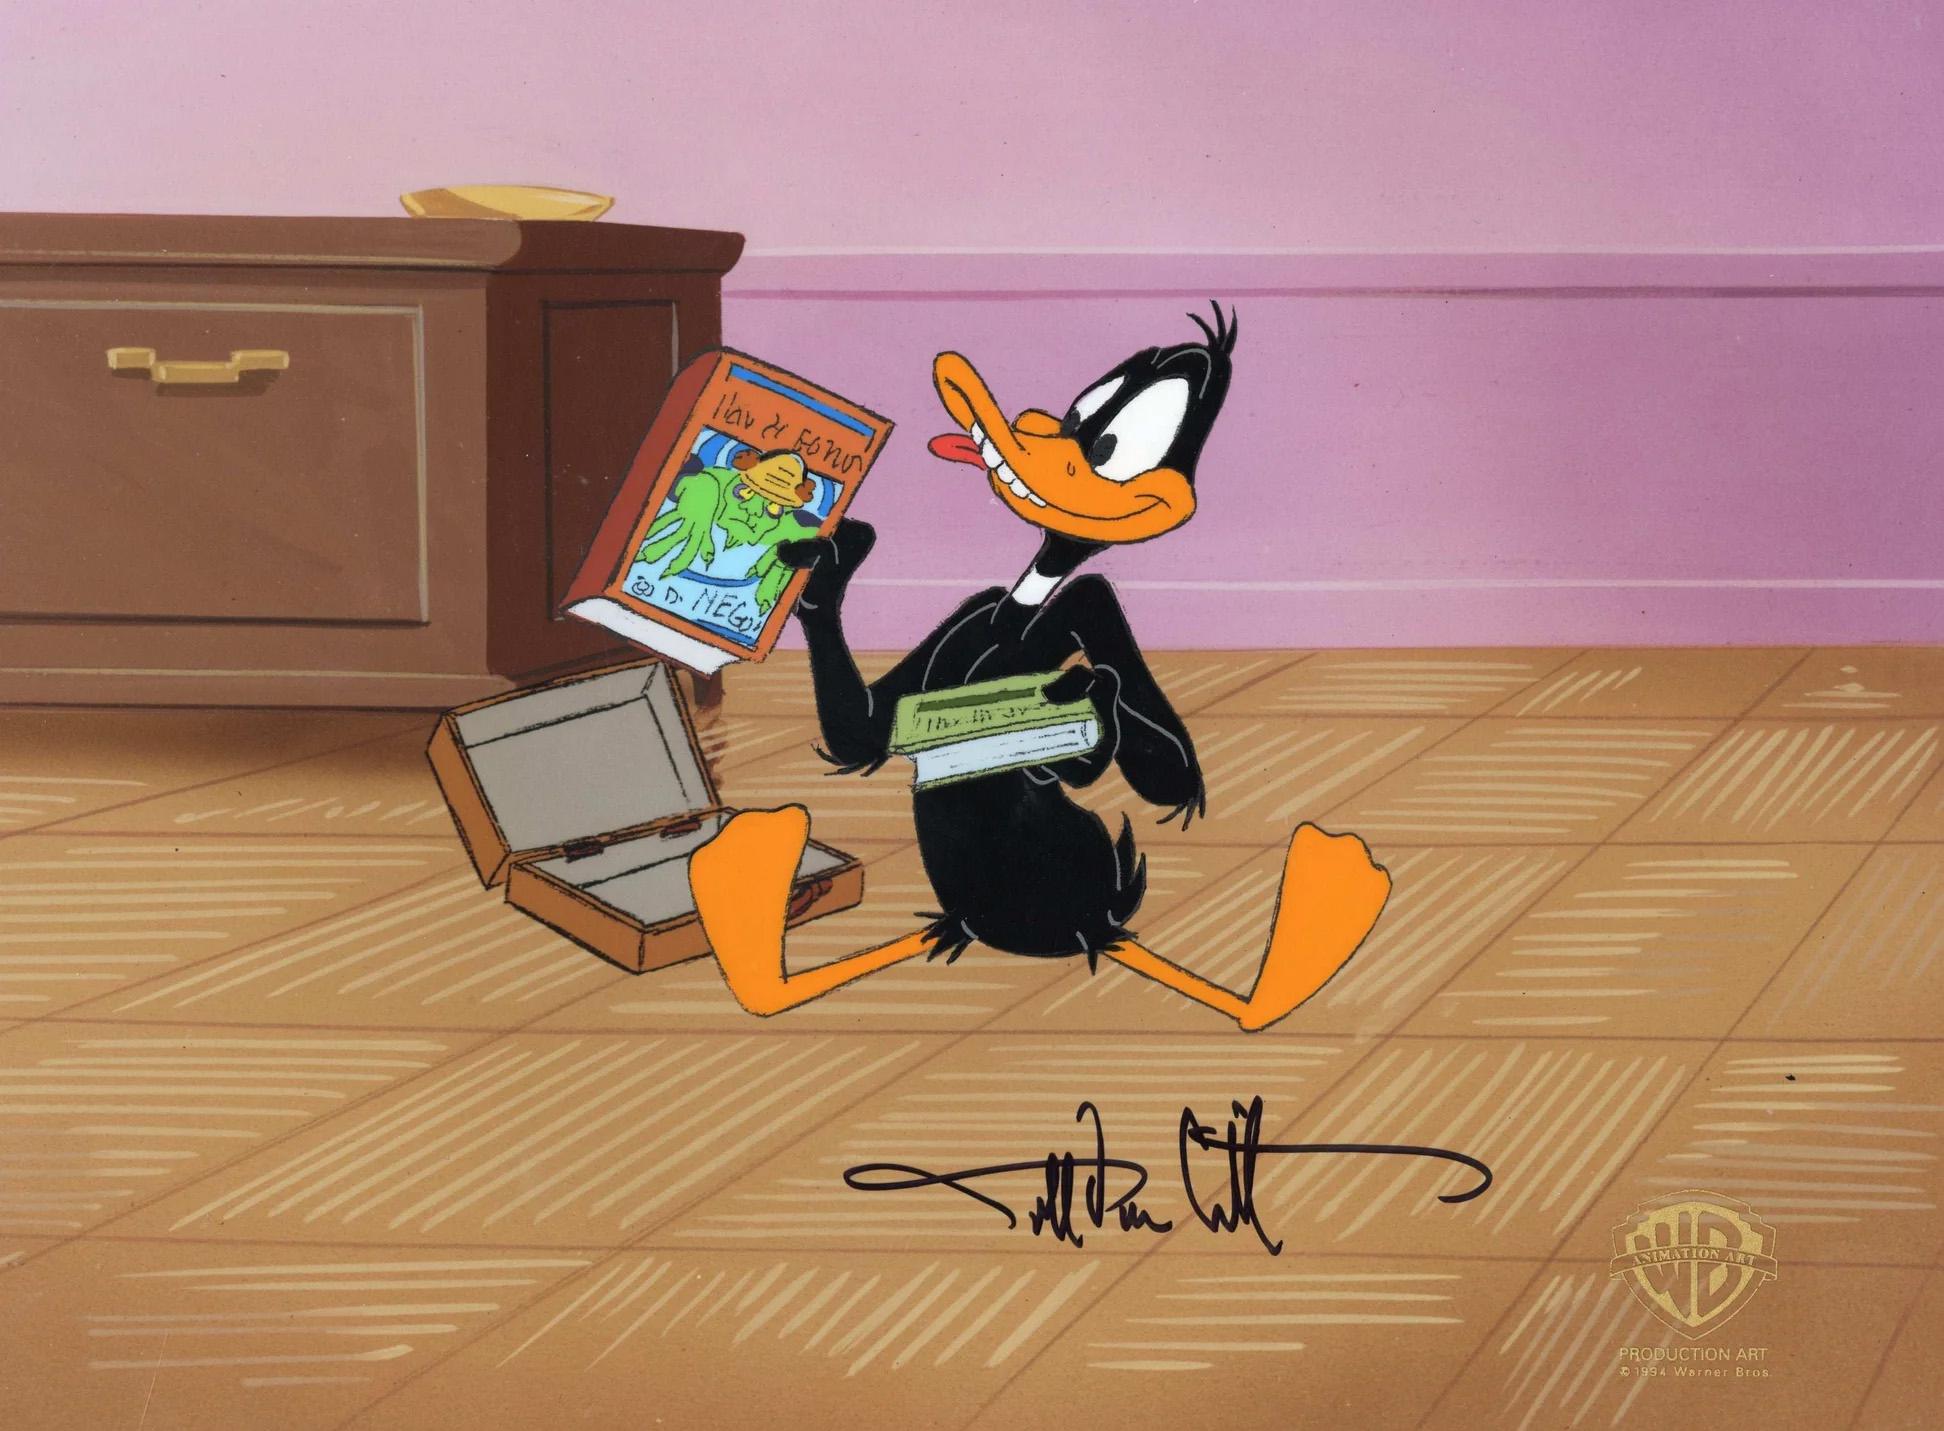 Looney Tunes Original Production Cel Signed by Darrel Van Citters: Daffy Duck - Art by Darrell Van Citters